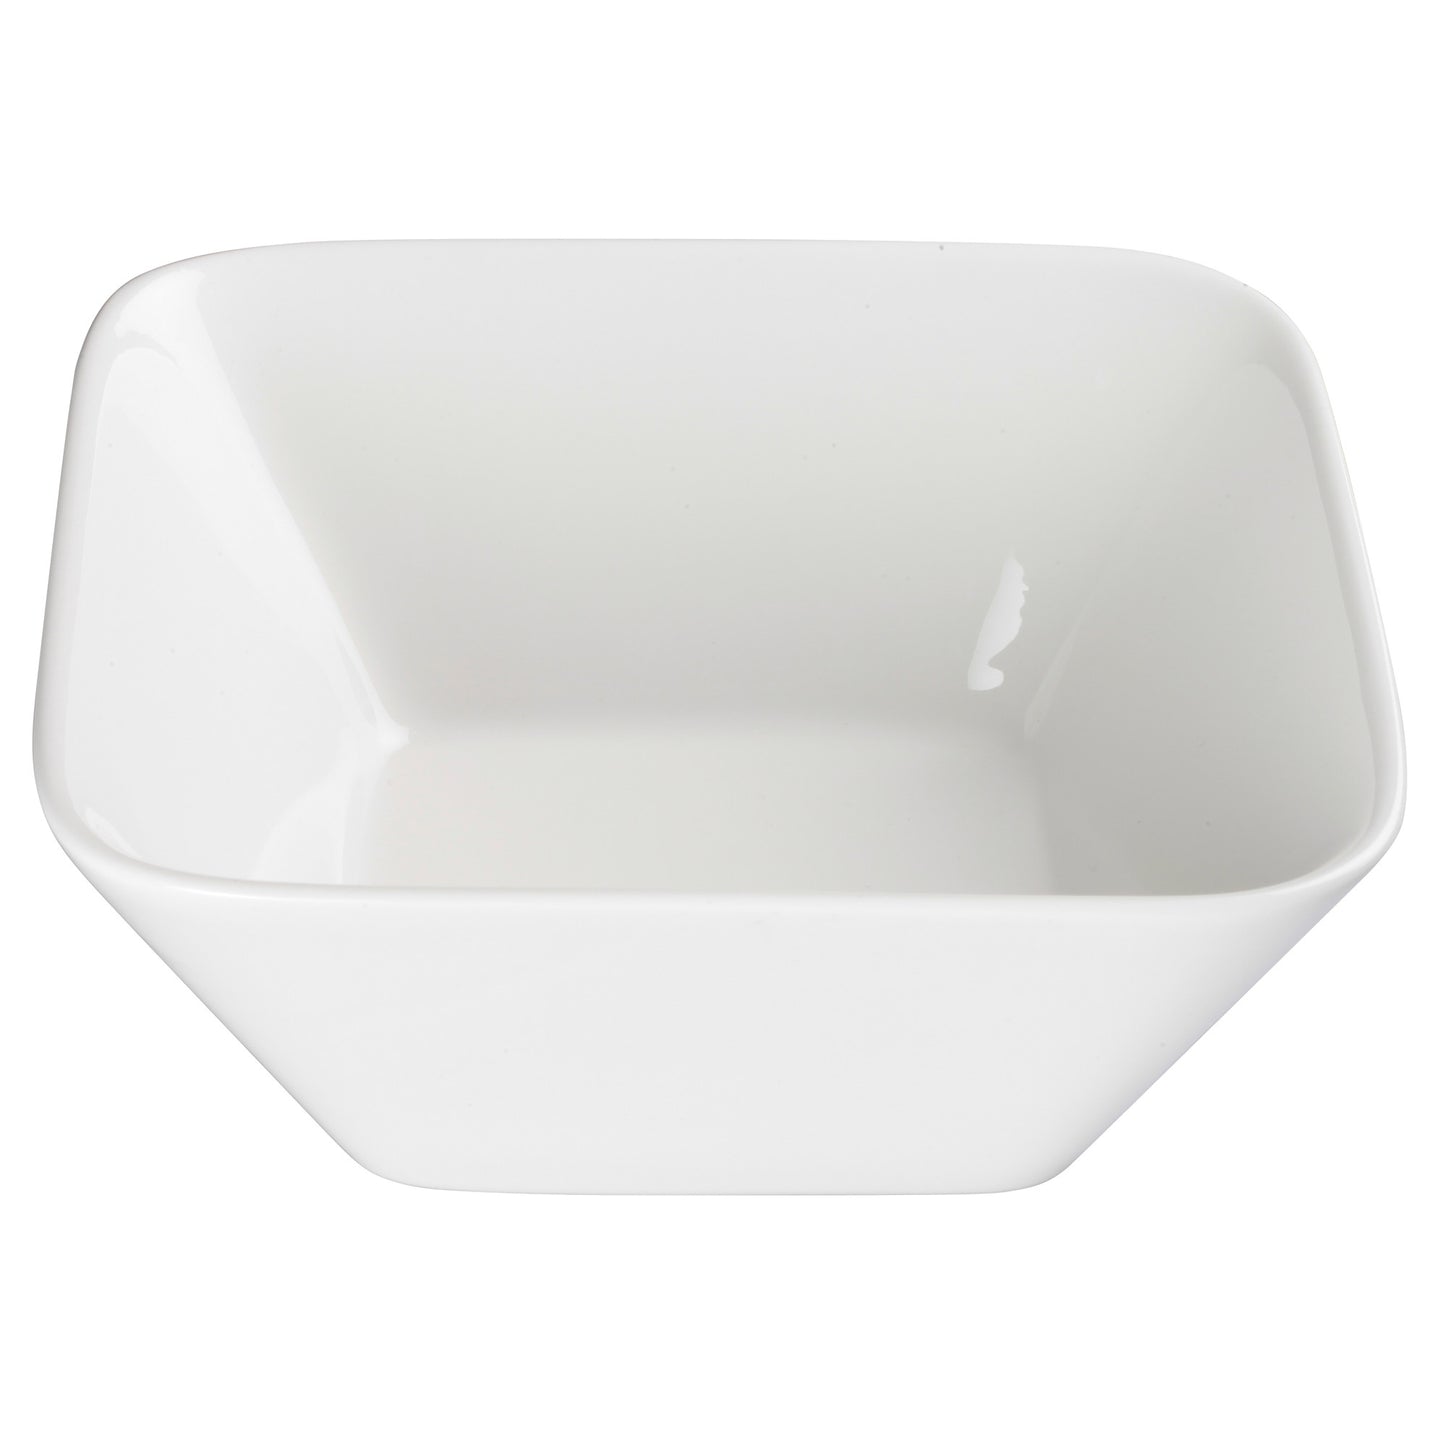 WDP008-104 - 7-5/8"Sq Porcelain Square Bowl, Bright White, 12 pcs/case